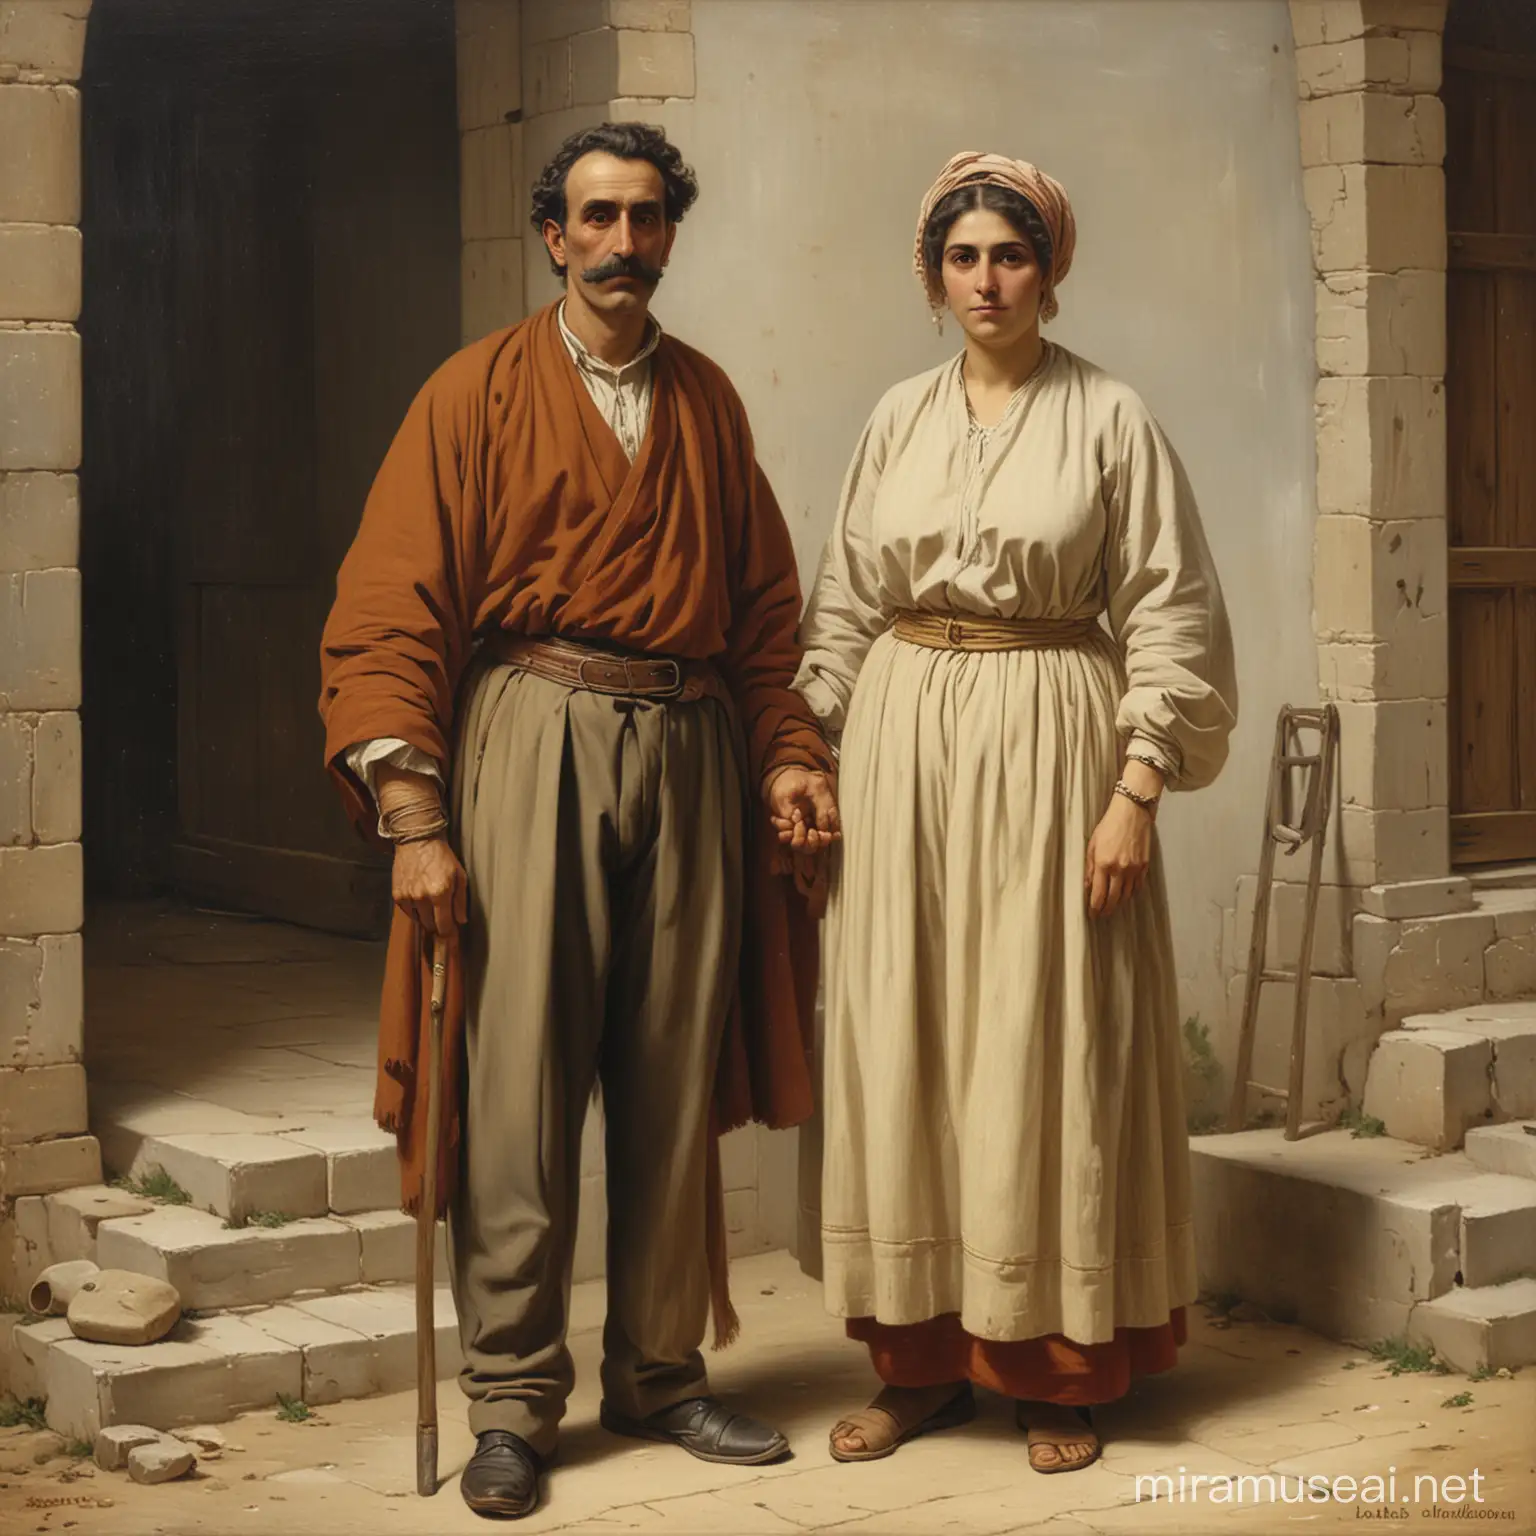 Pachis Charalambos (1844 - 1891) 
Rigas Feraios, 1871
Oil on canvas, 102 x 78 cm
E. Koutlidis Foundation Collection